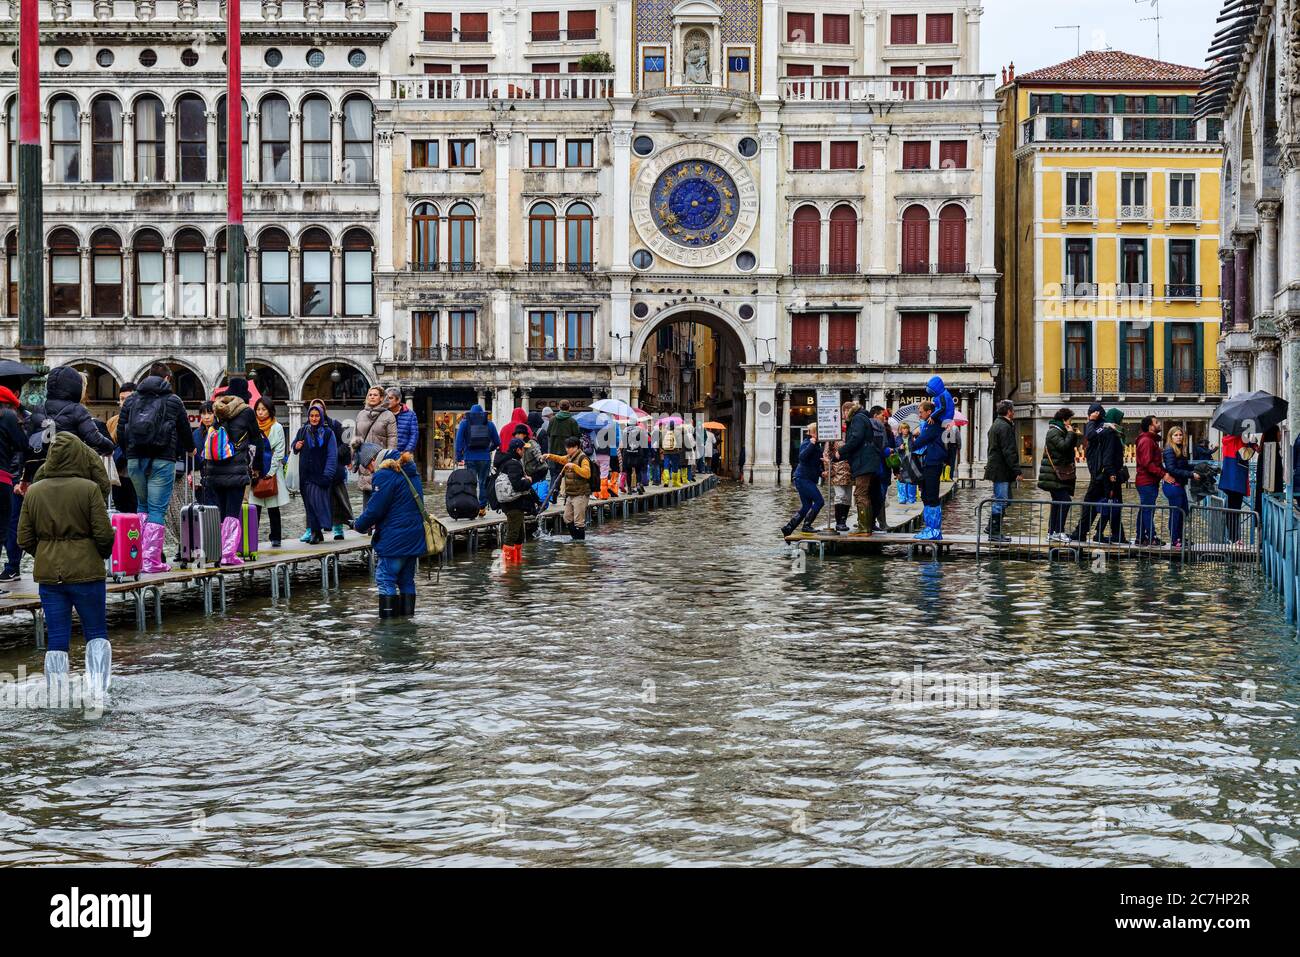 Square, cathedral, church, clock tower, floodgate, footbridges, flood, Aqua Alta, people, rainy weather, flooding Stock Photo